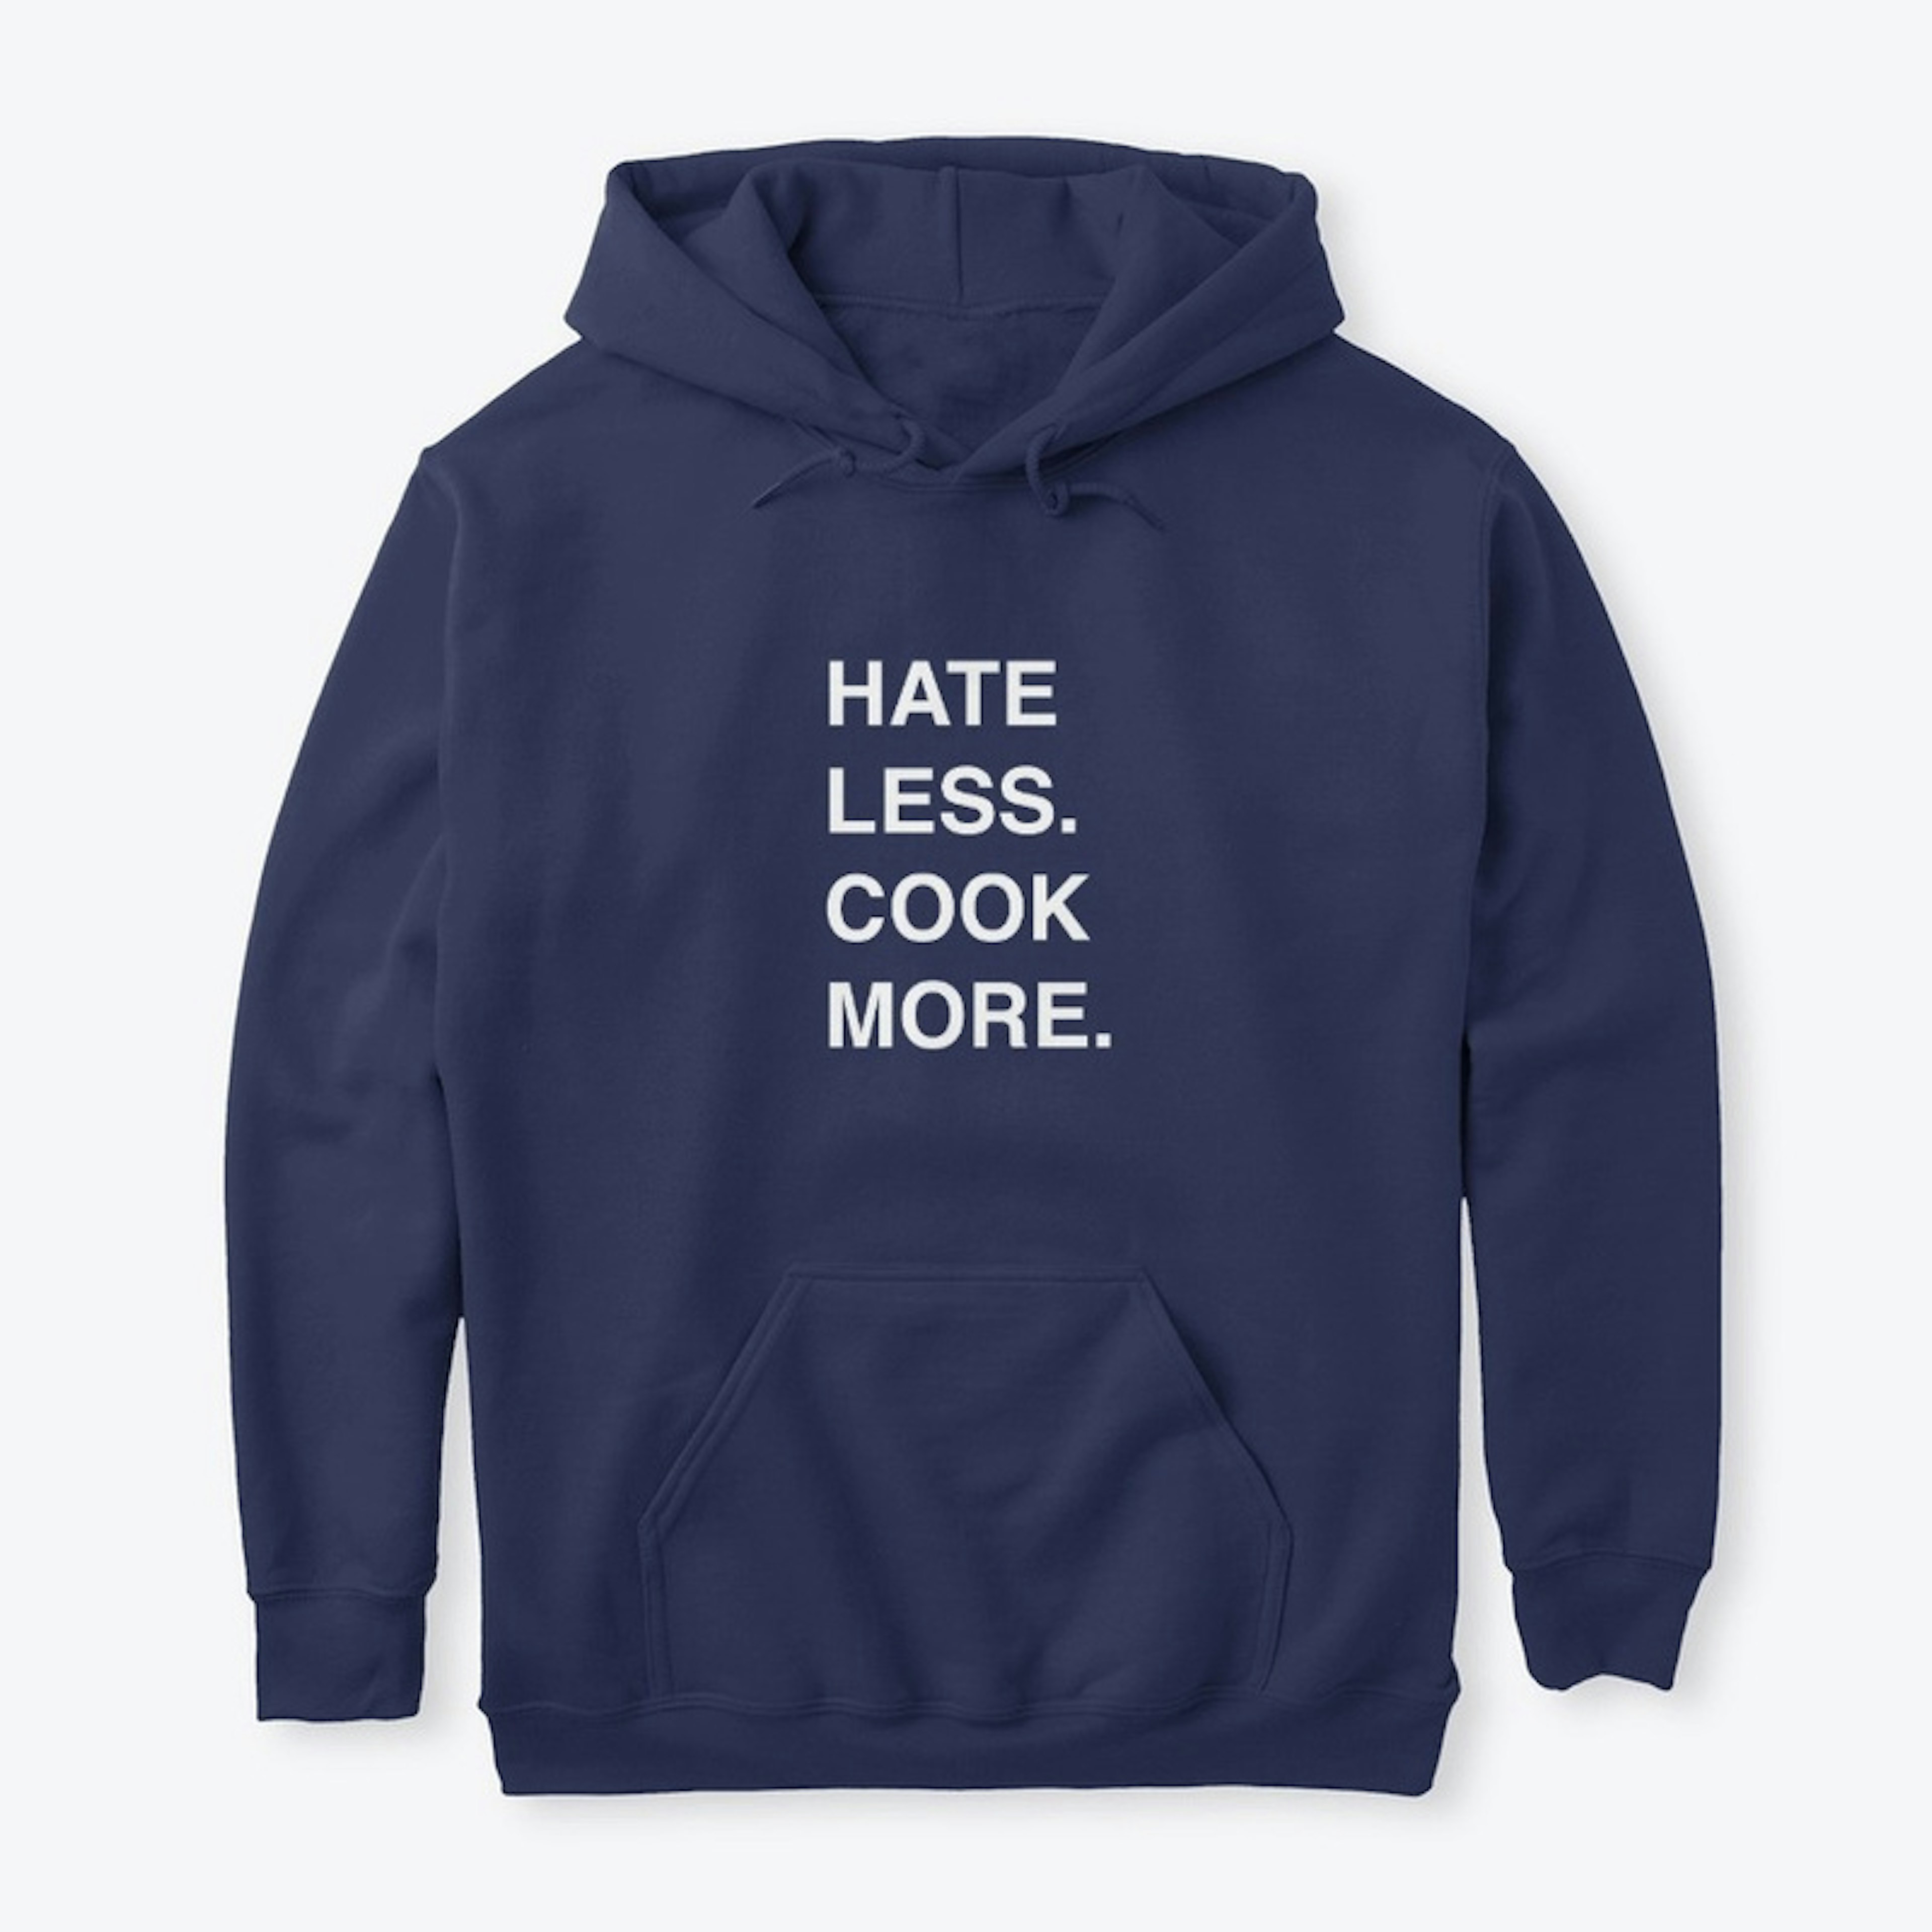 HATE LESS COOK MORE HOODIE